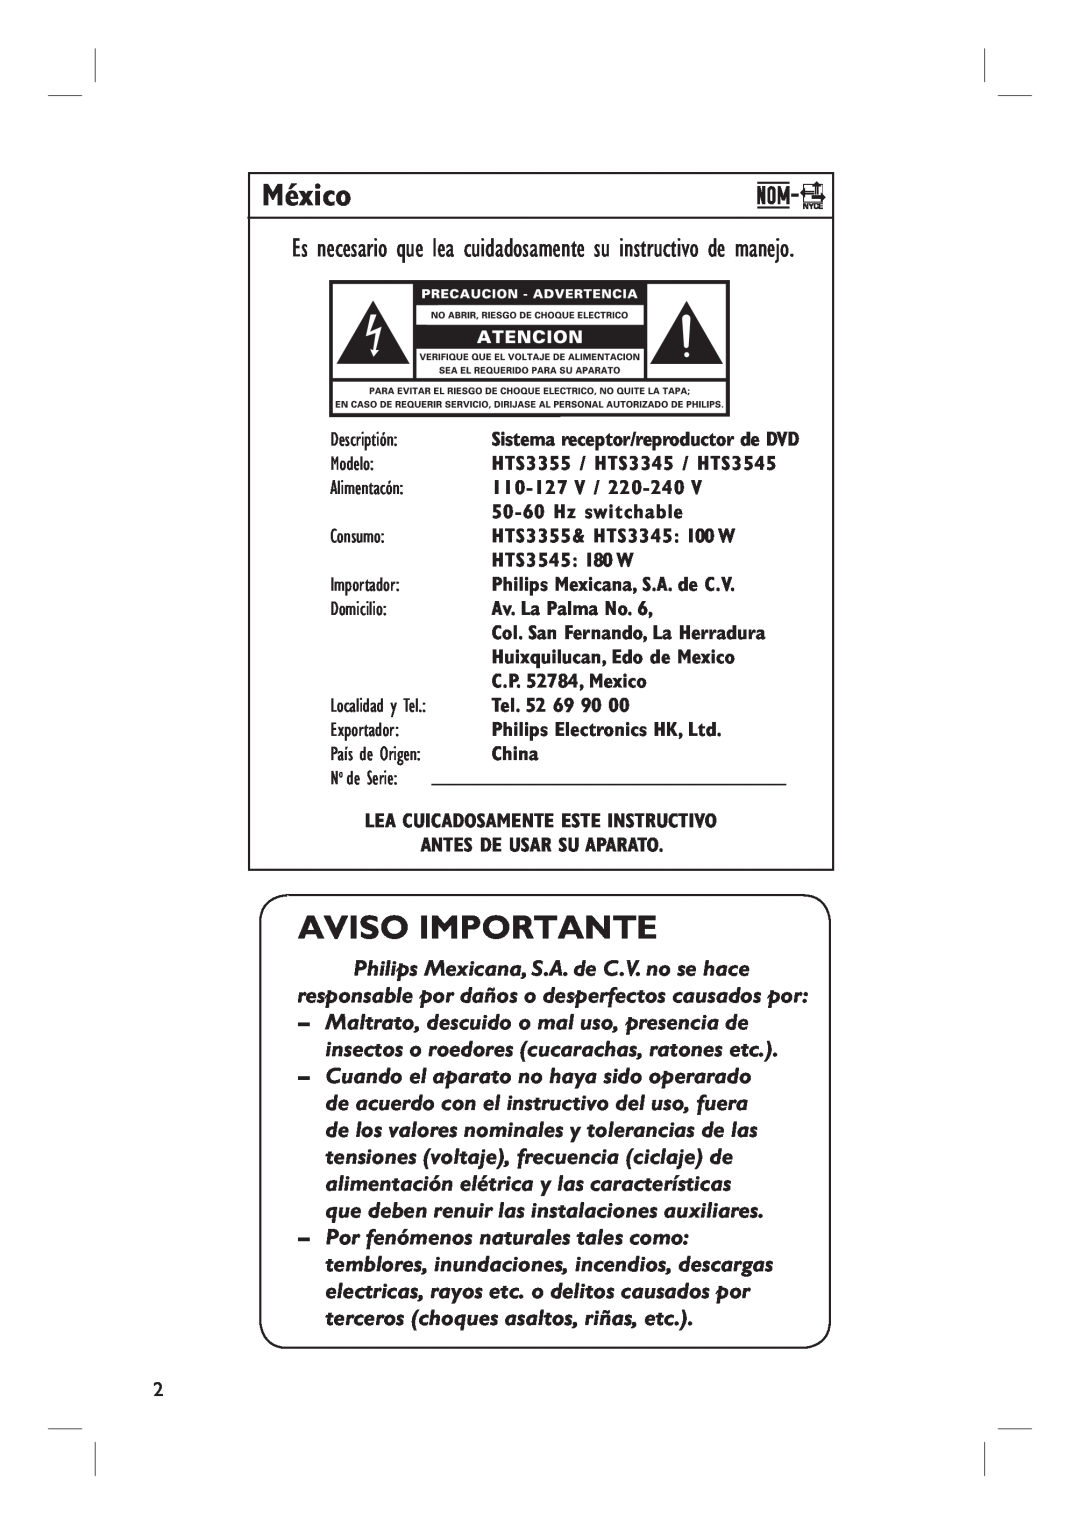 Philips Aviso Importante, México, Modelo, HTS3355 / HTS3345 / HTS3545, 110-127V, 50-60Hz switchable, Consumo, Domicilio 